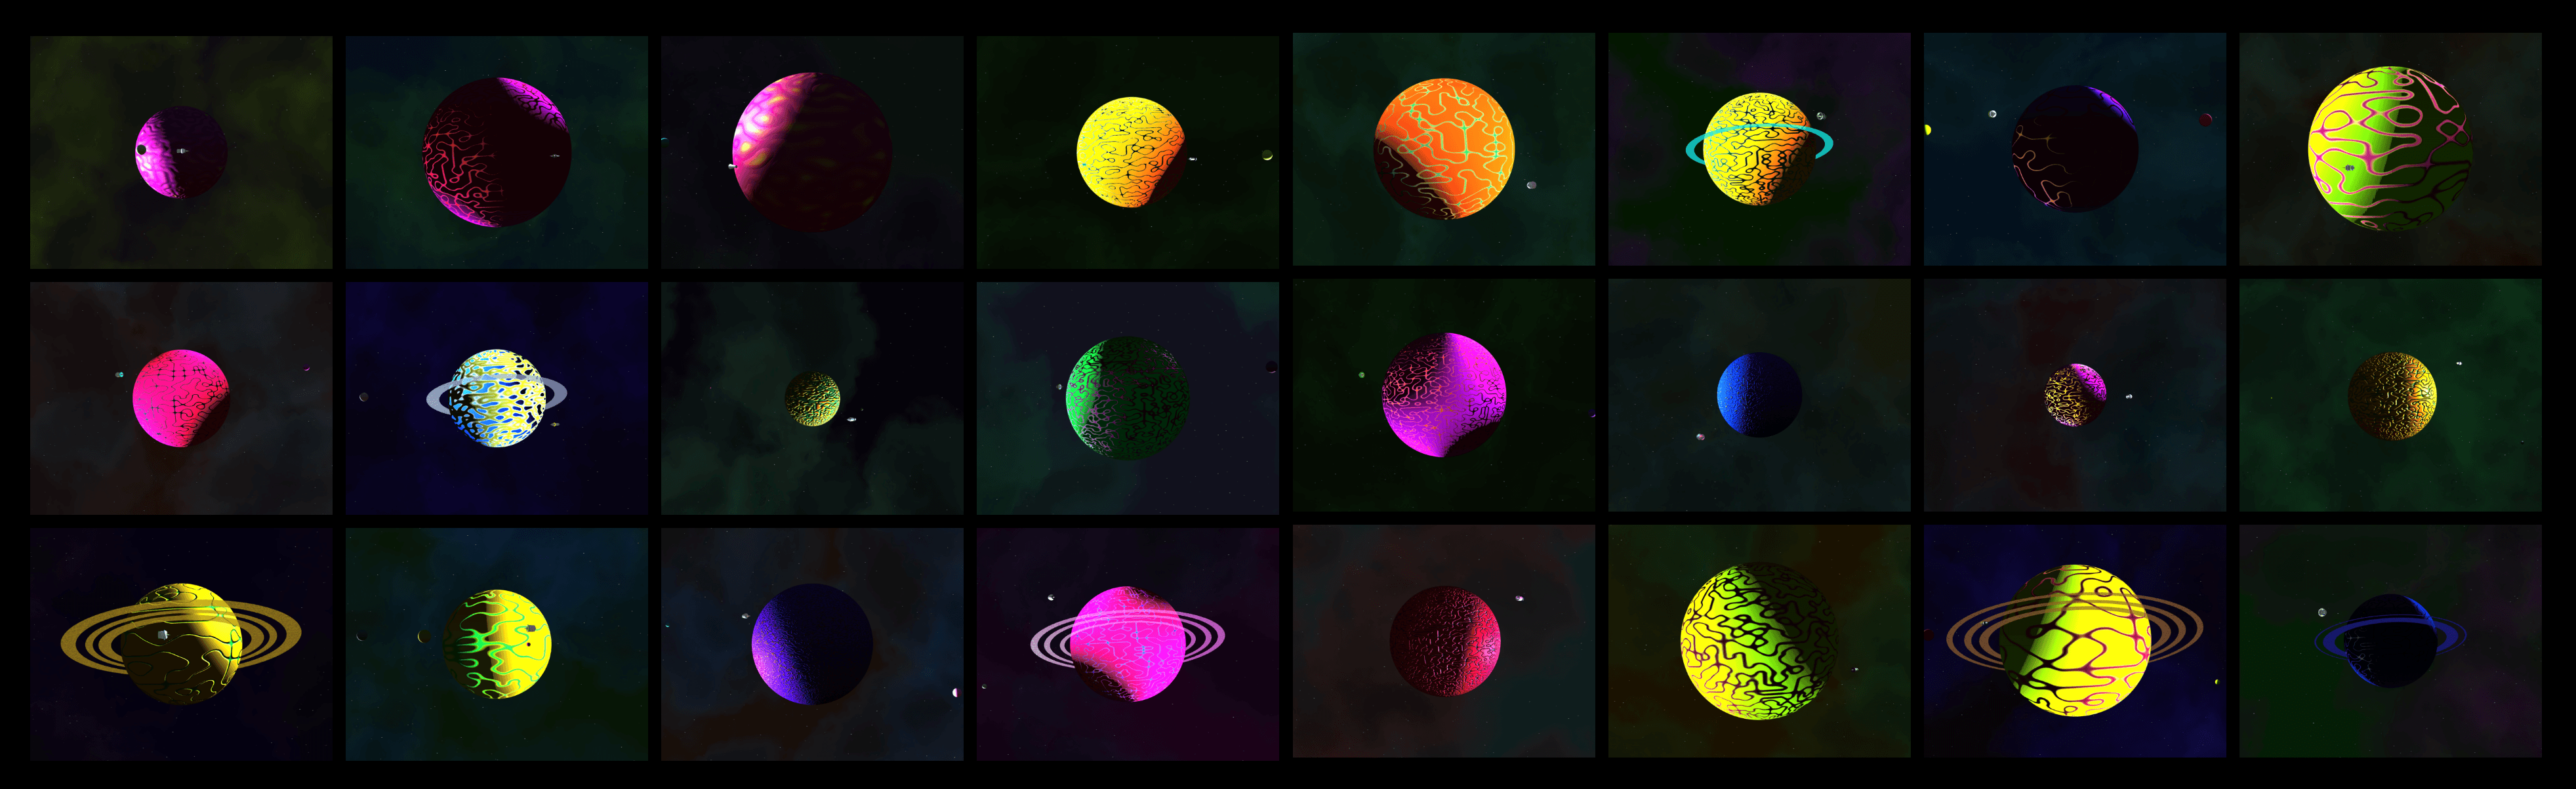 Astraglade - Planets